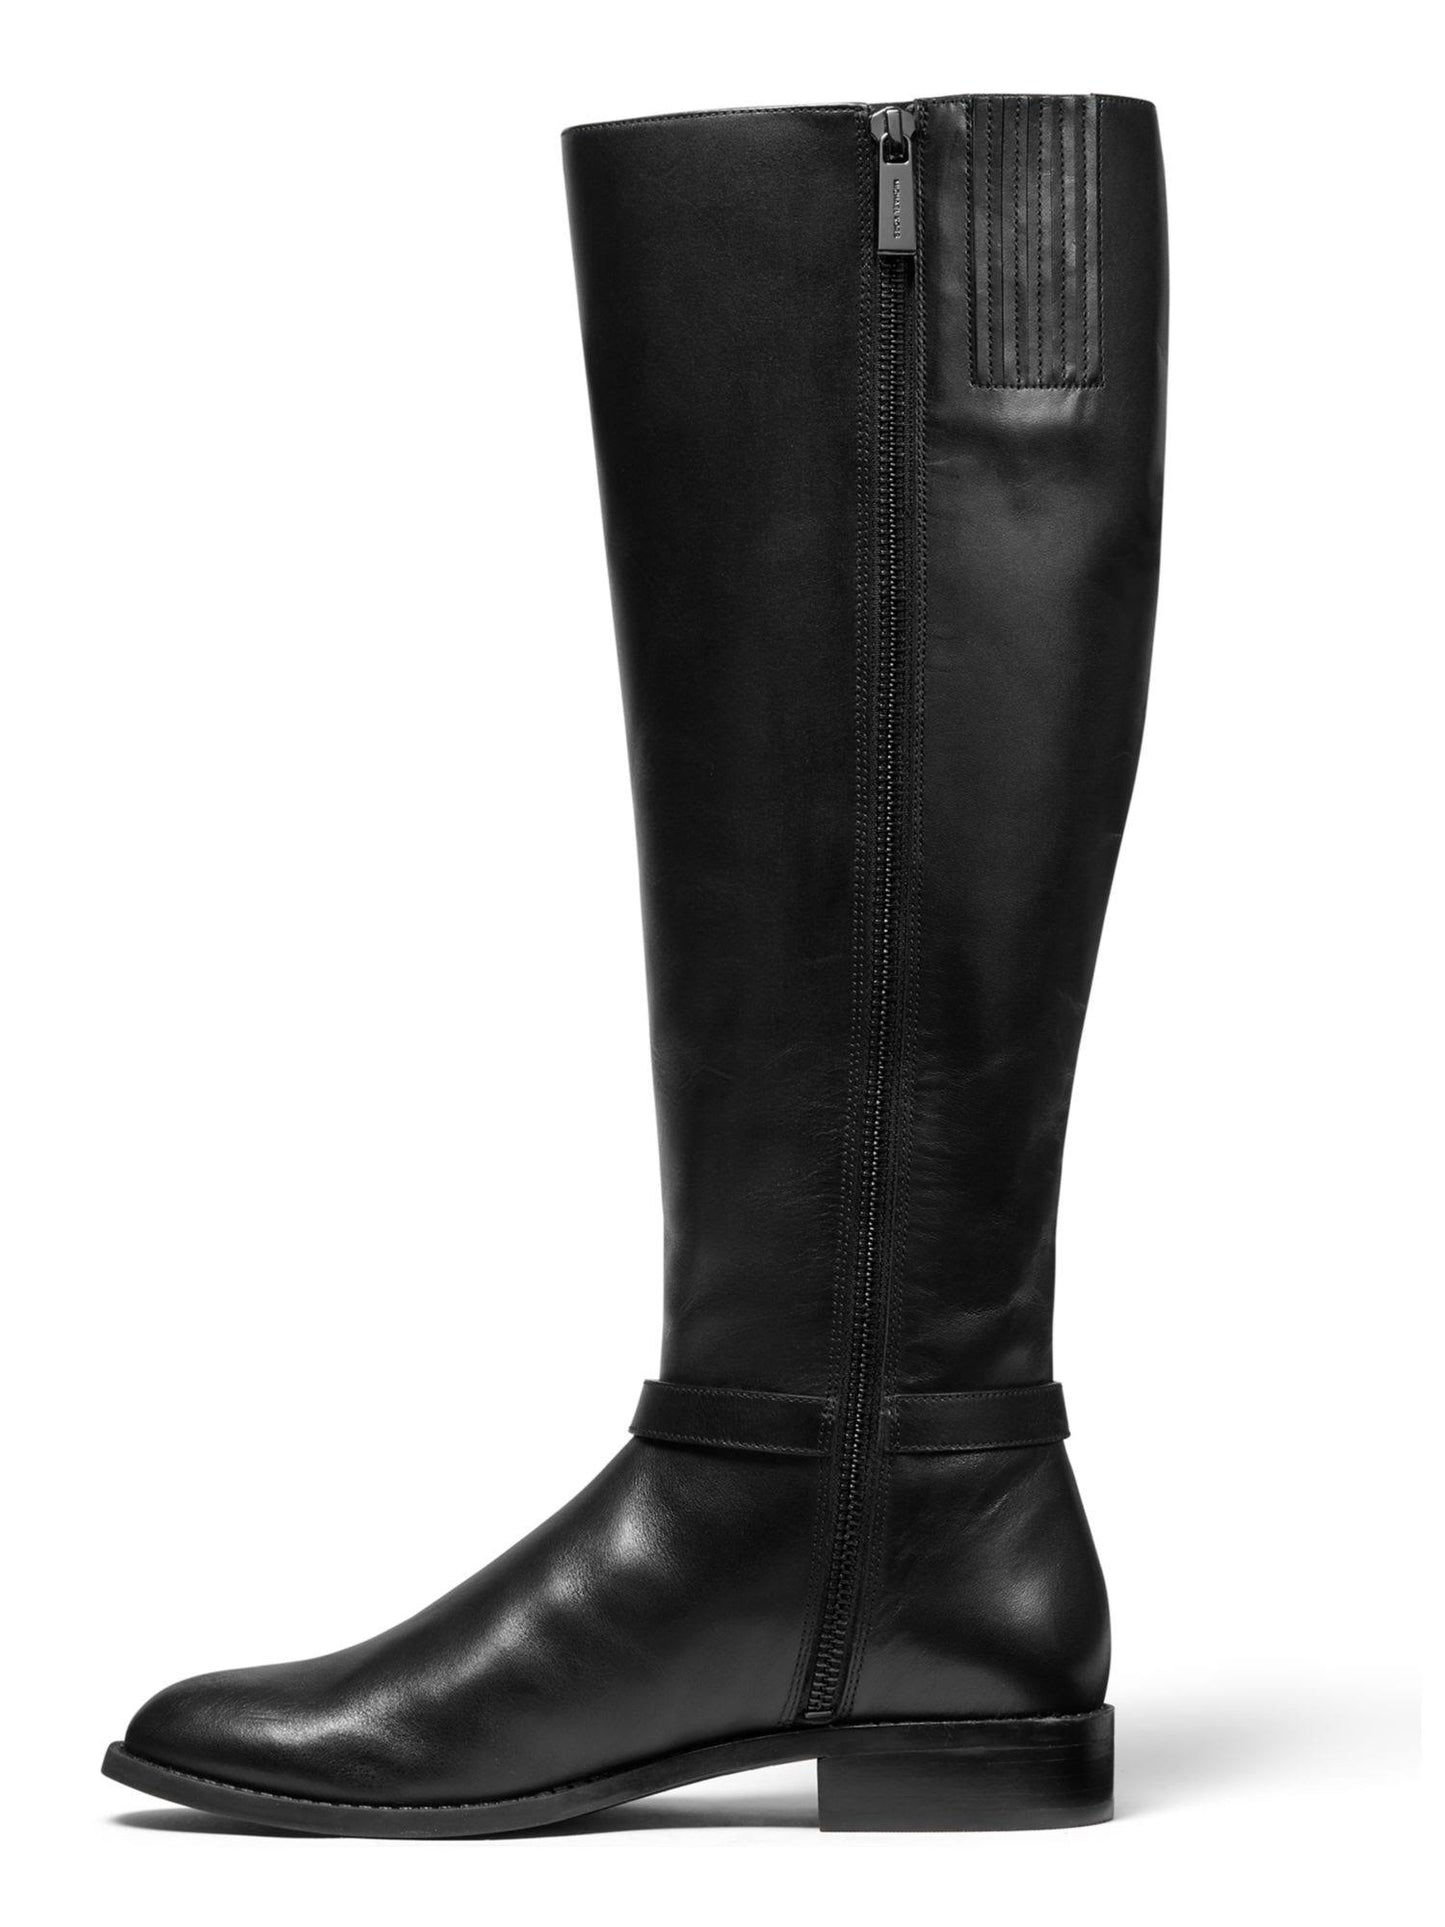 Michael kors boots size 35-35.5